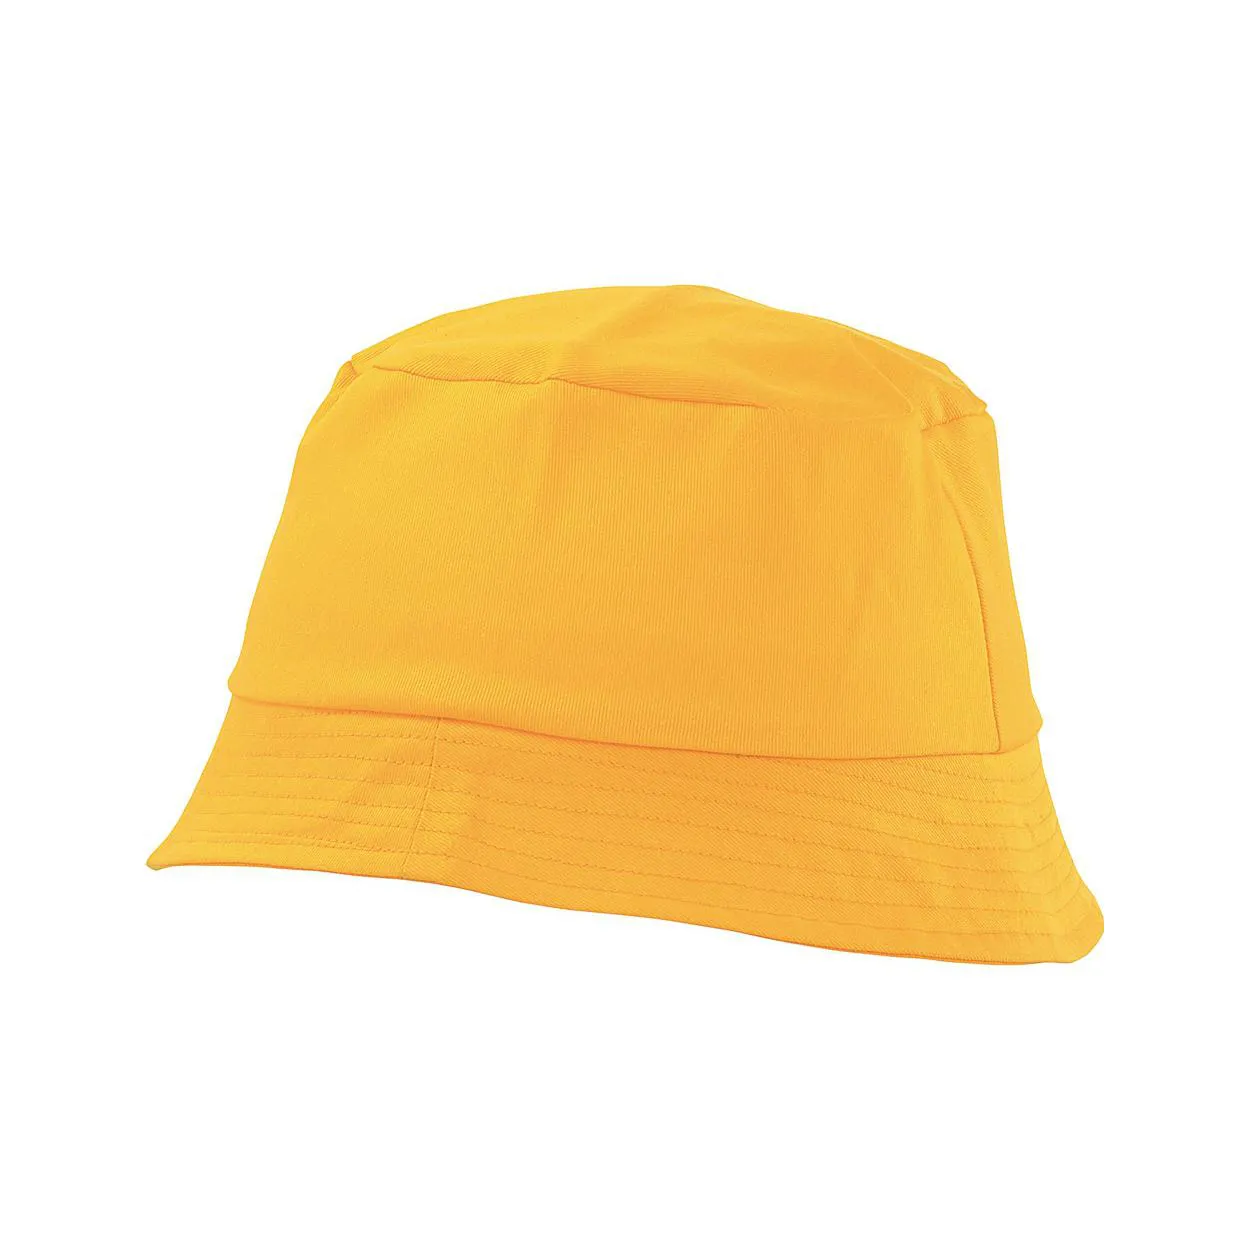 Pălărie pescar Marvin galben